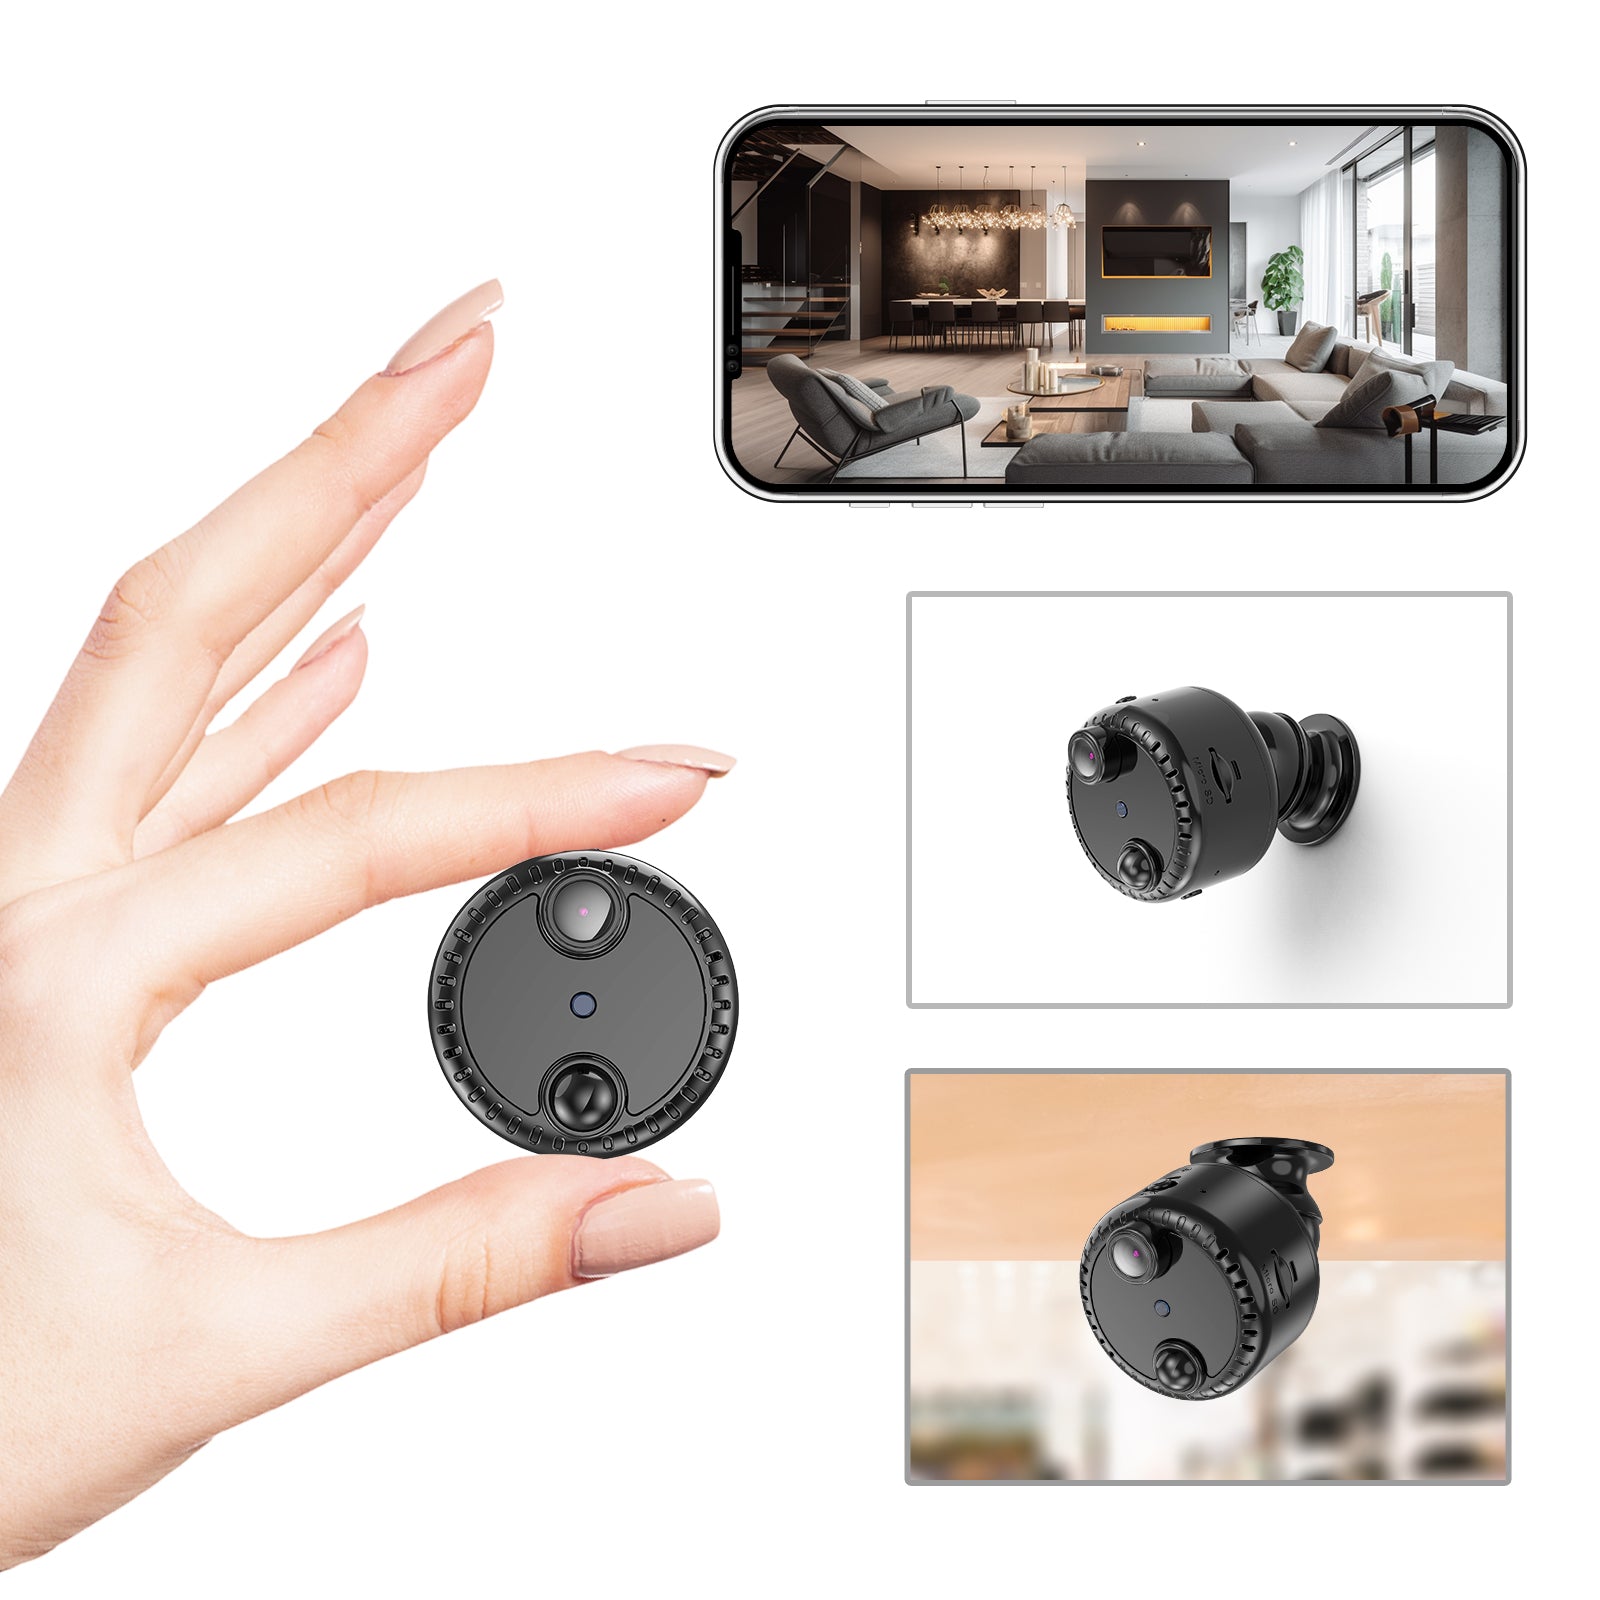  Mini Spy Camera Wireless Hidden Home WiFi Security